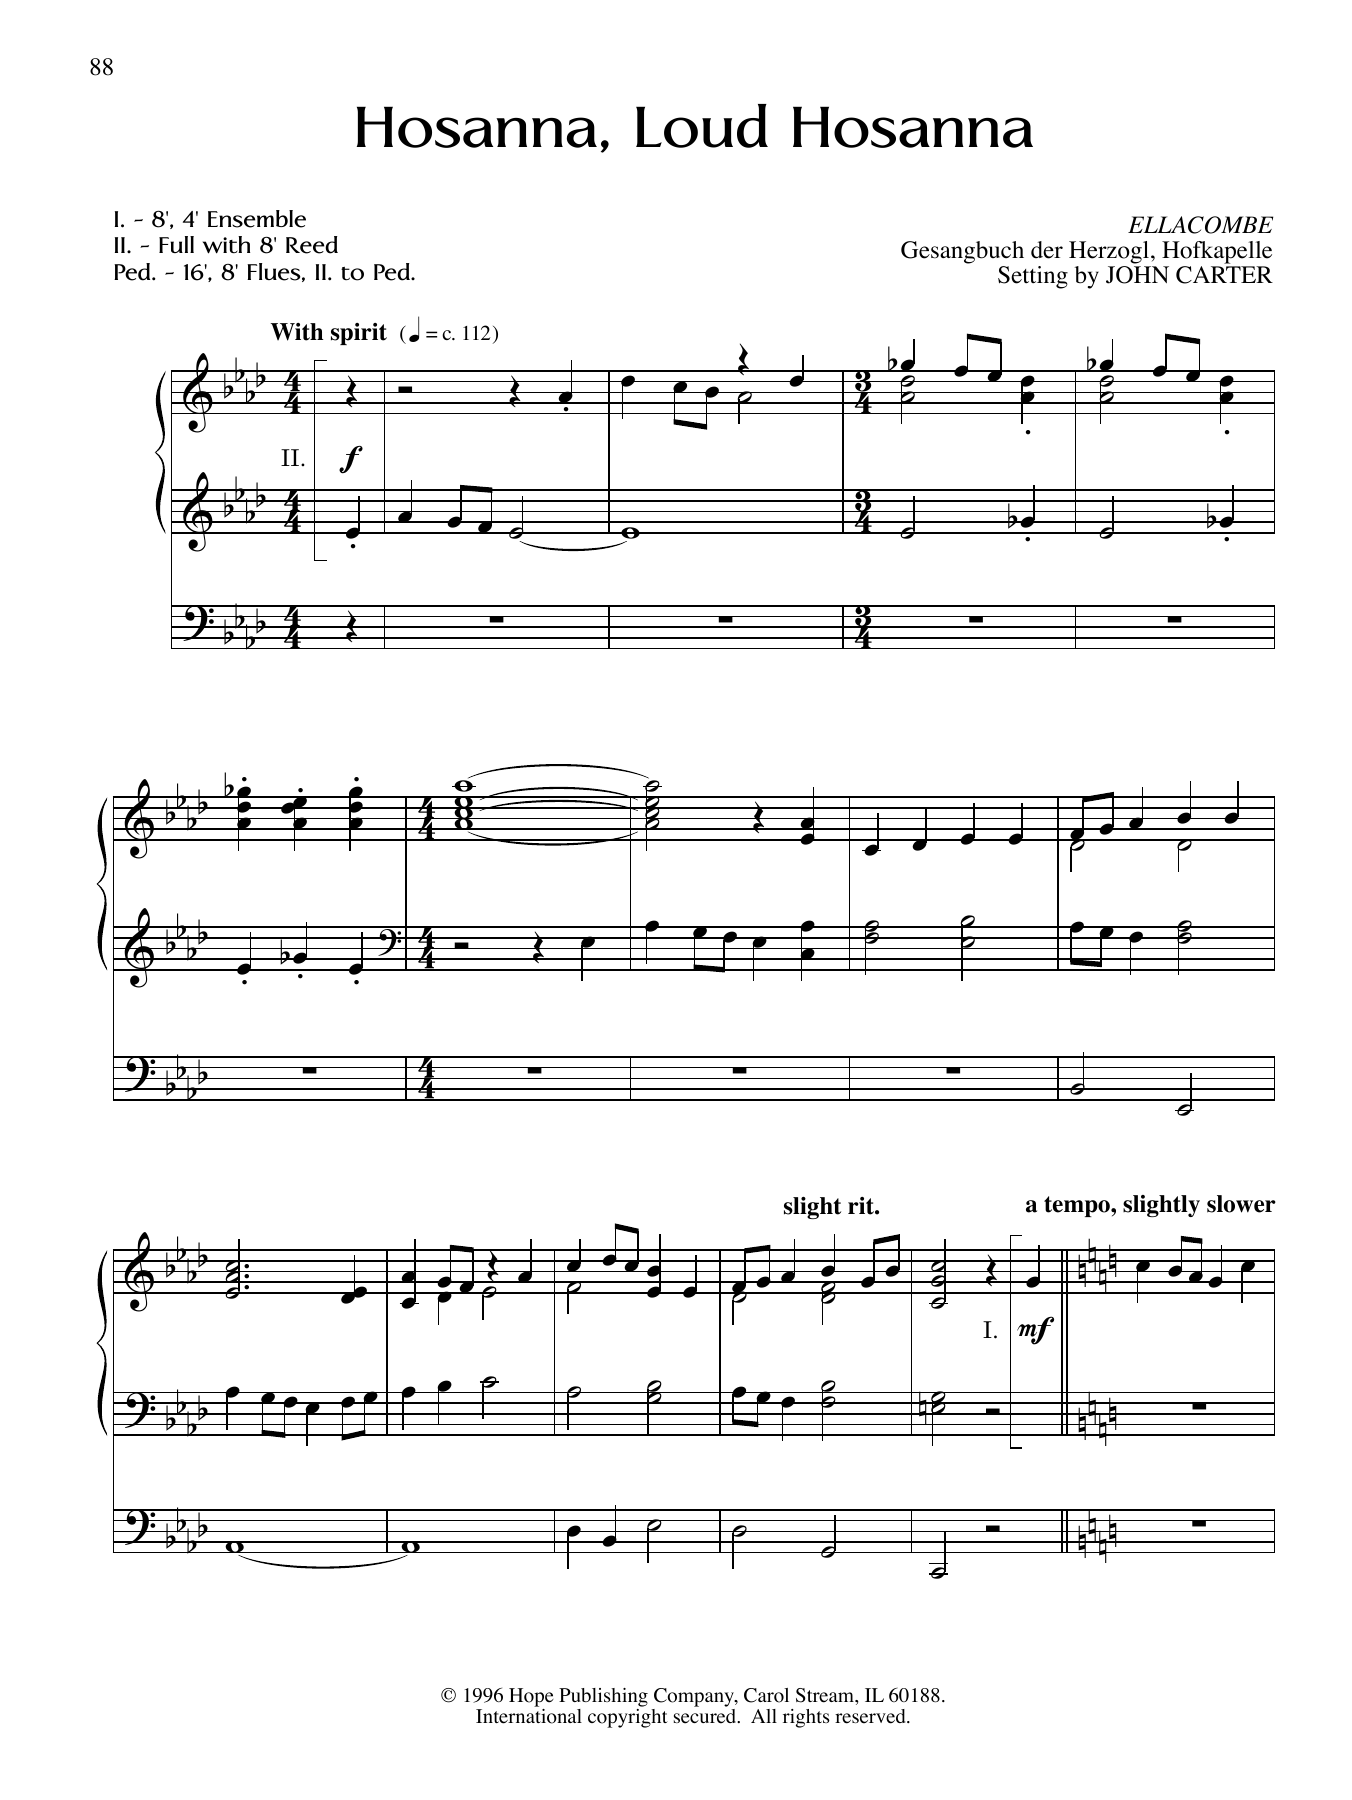 John Carter Hosanna, Loud Hosanna Sheet Music Notes & Chords for Organ - Download or Print PDF